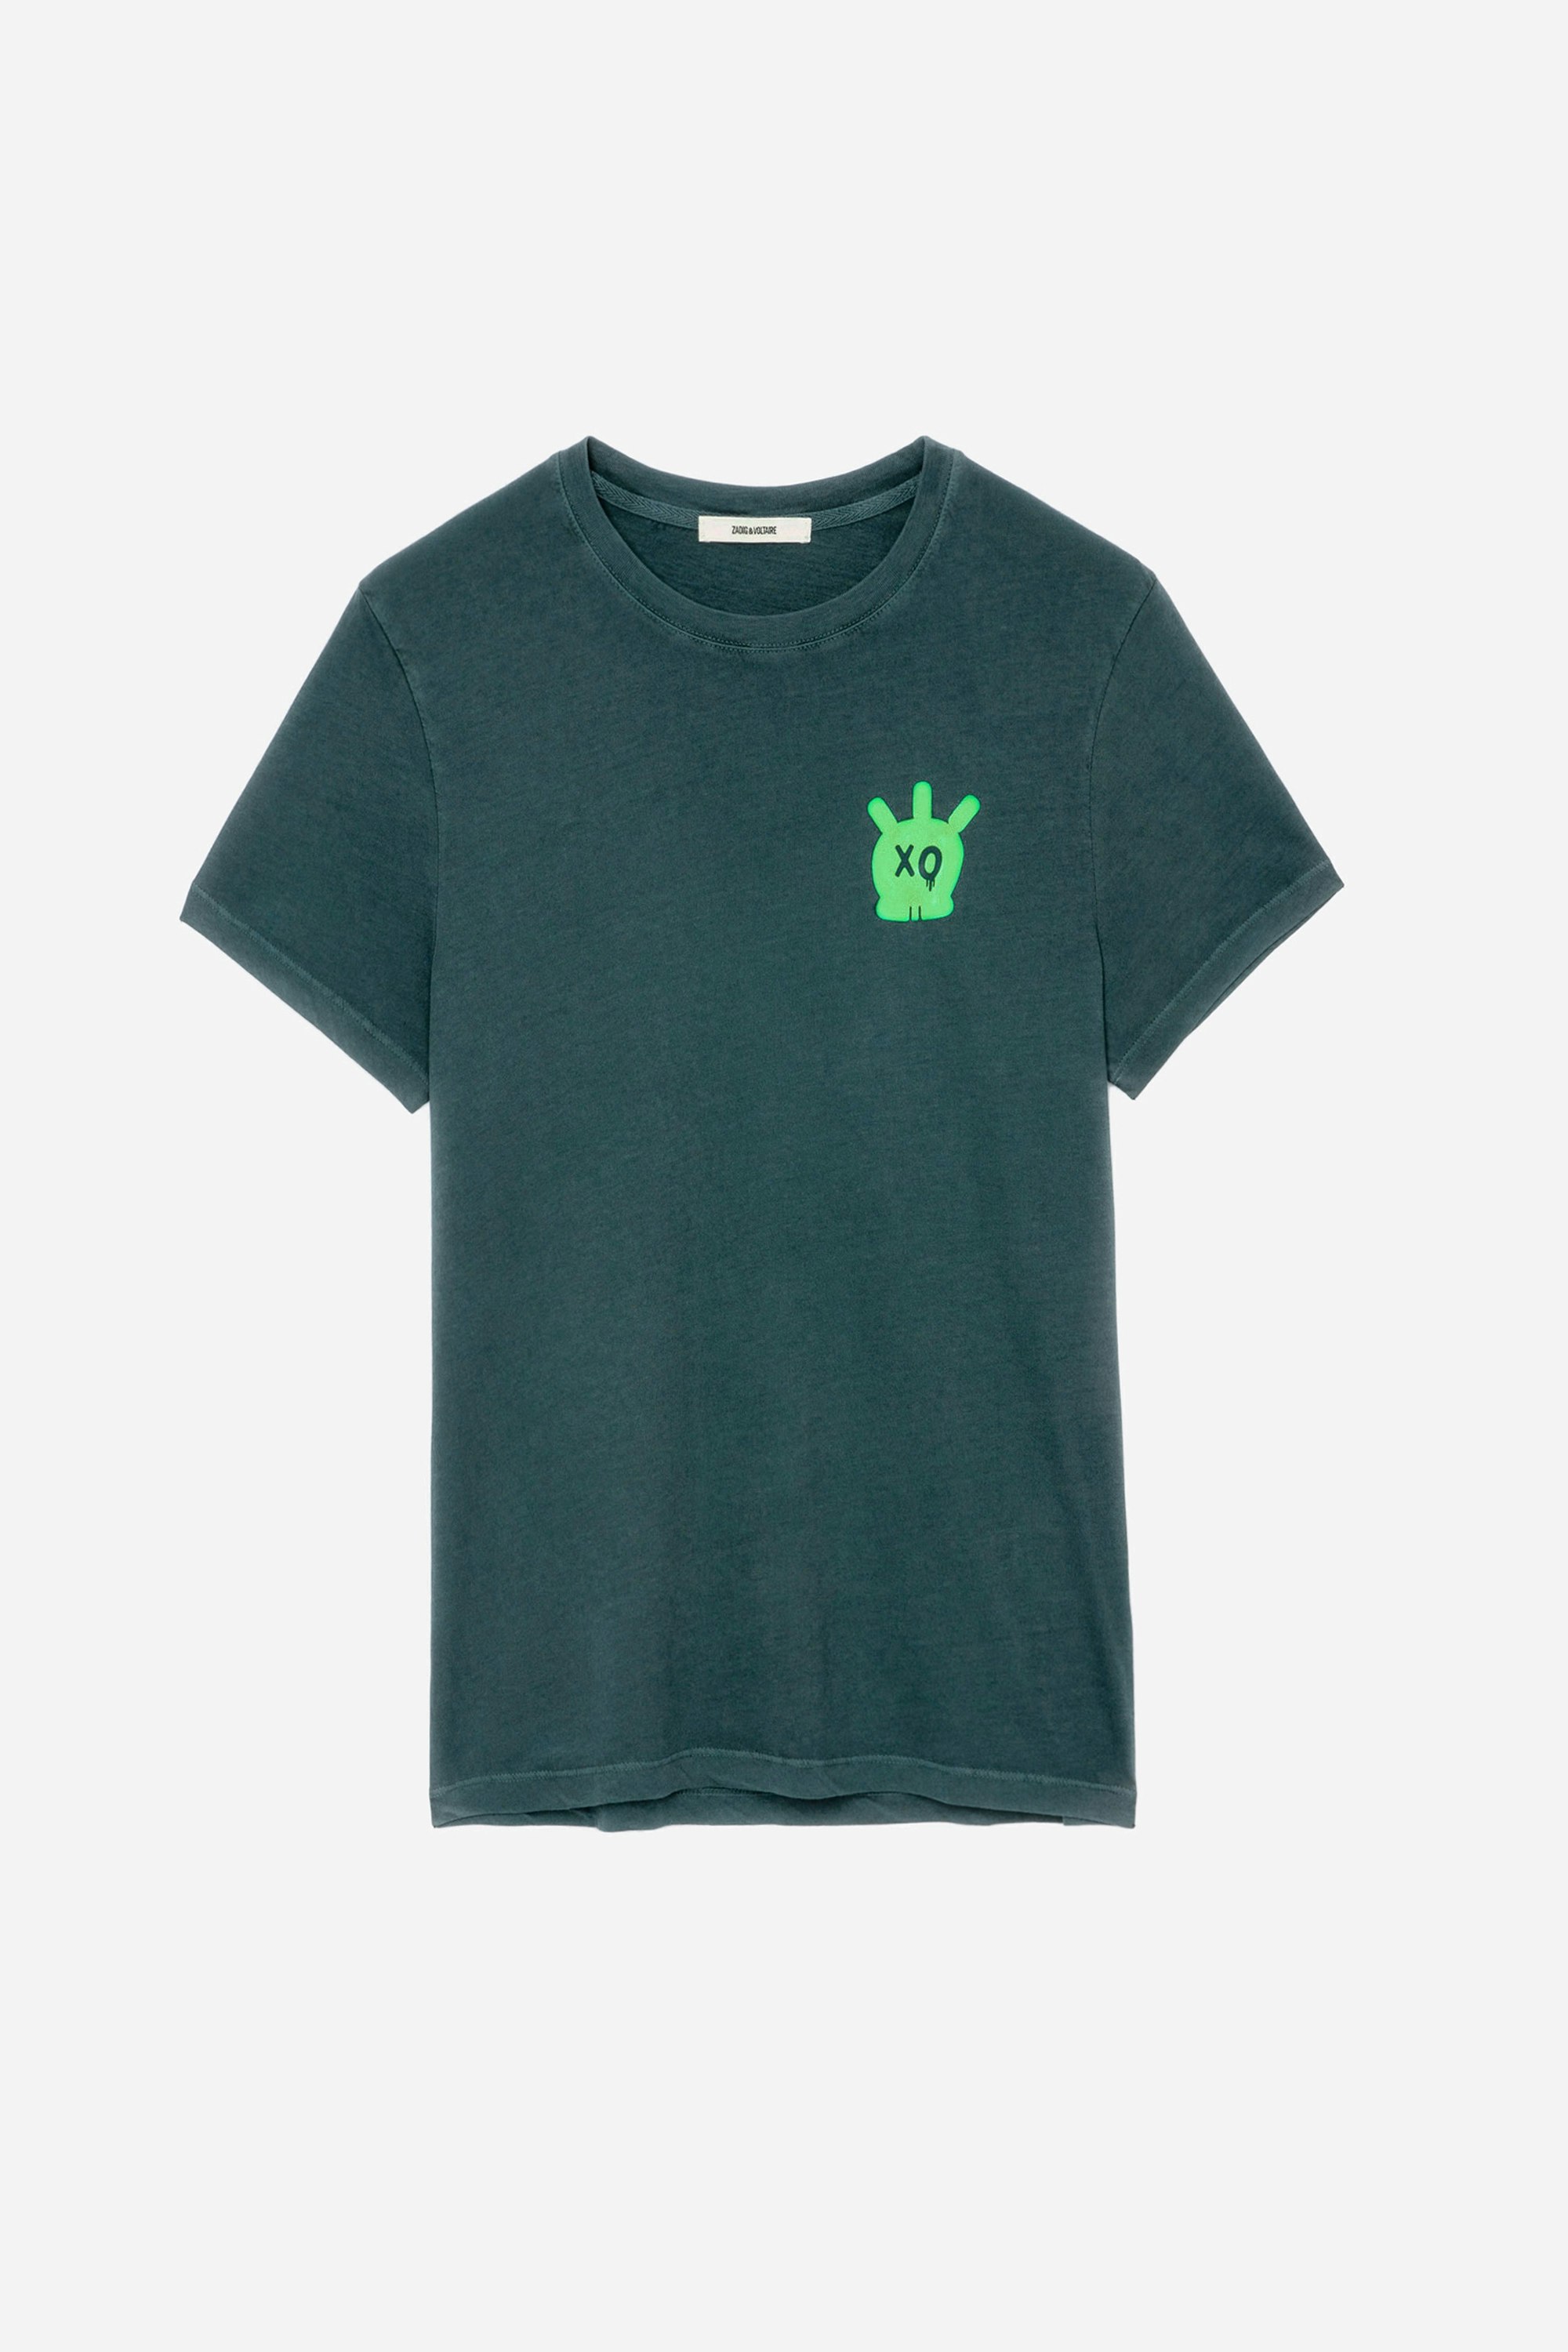 Tommy Skull T-shirt - Men's dark green cotton T-shirt featuring a textured Skull XO motif on the chest.